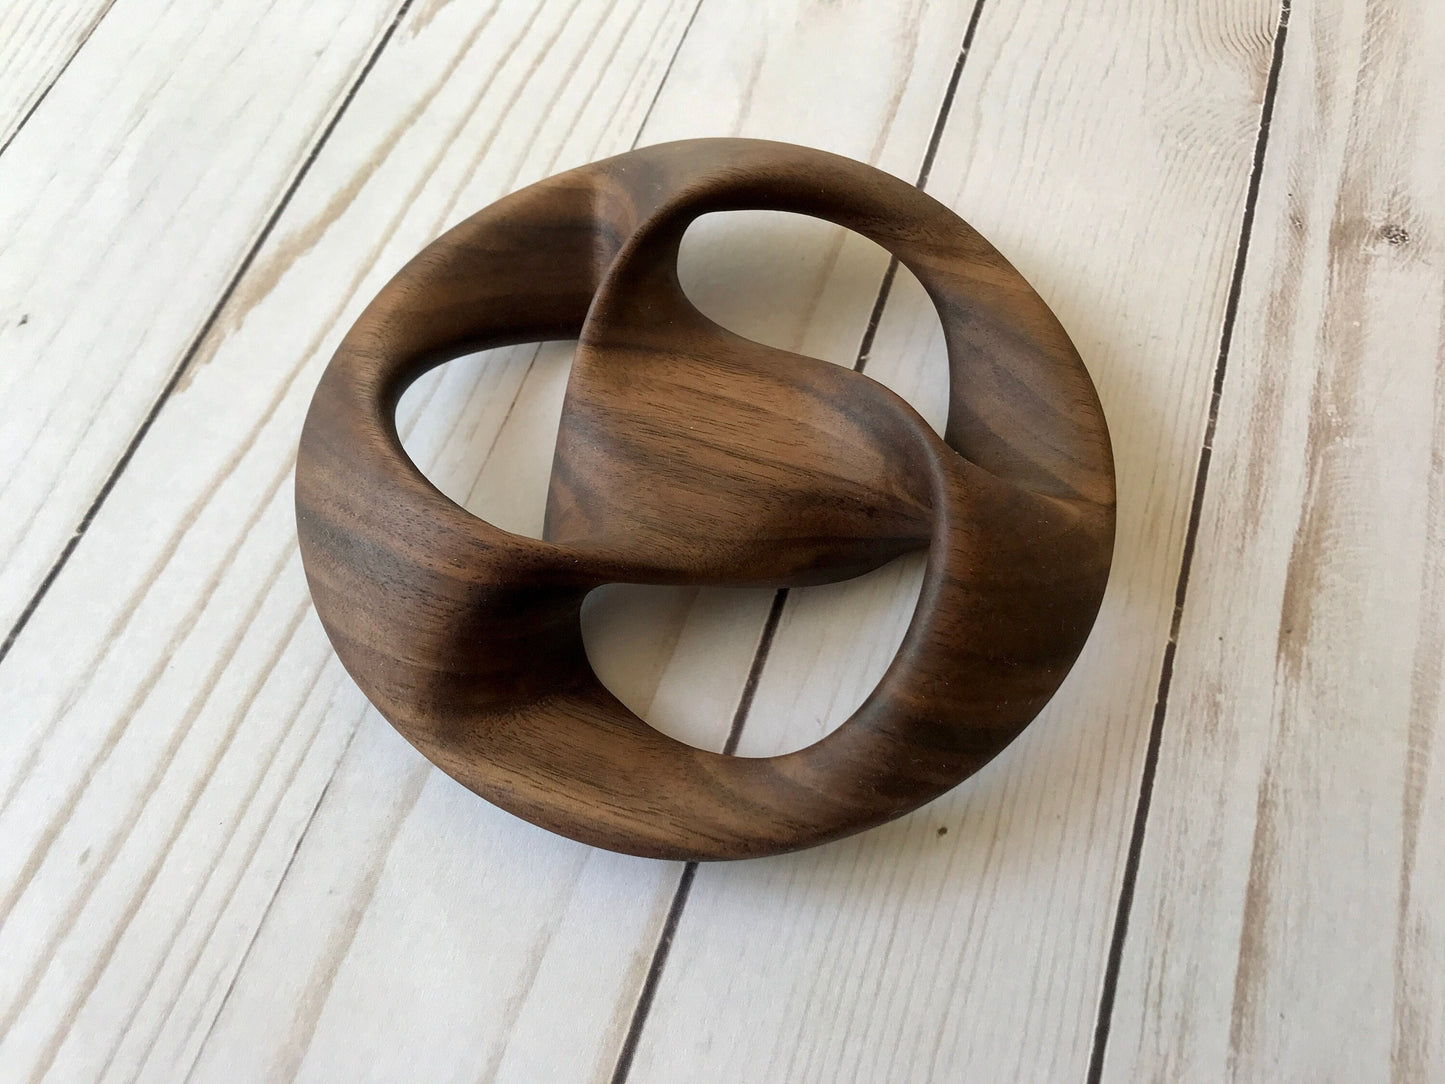 Triquetra Mobius Strip-like Wooden Sculpture, Walnut Wood, 5"